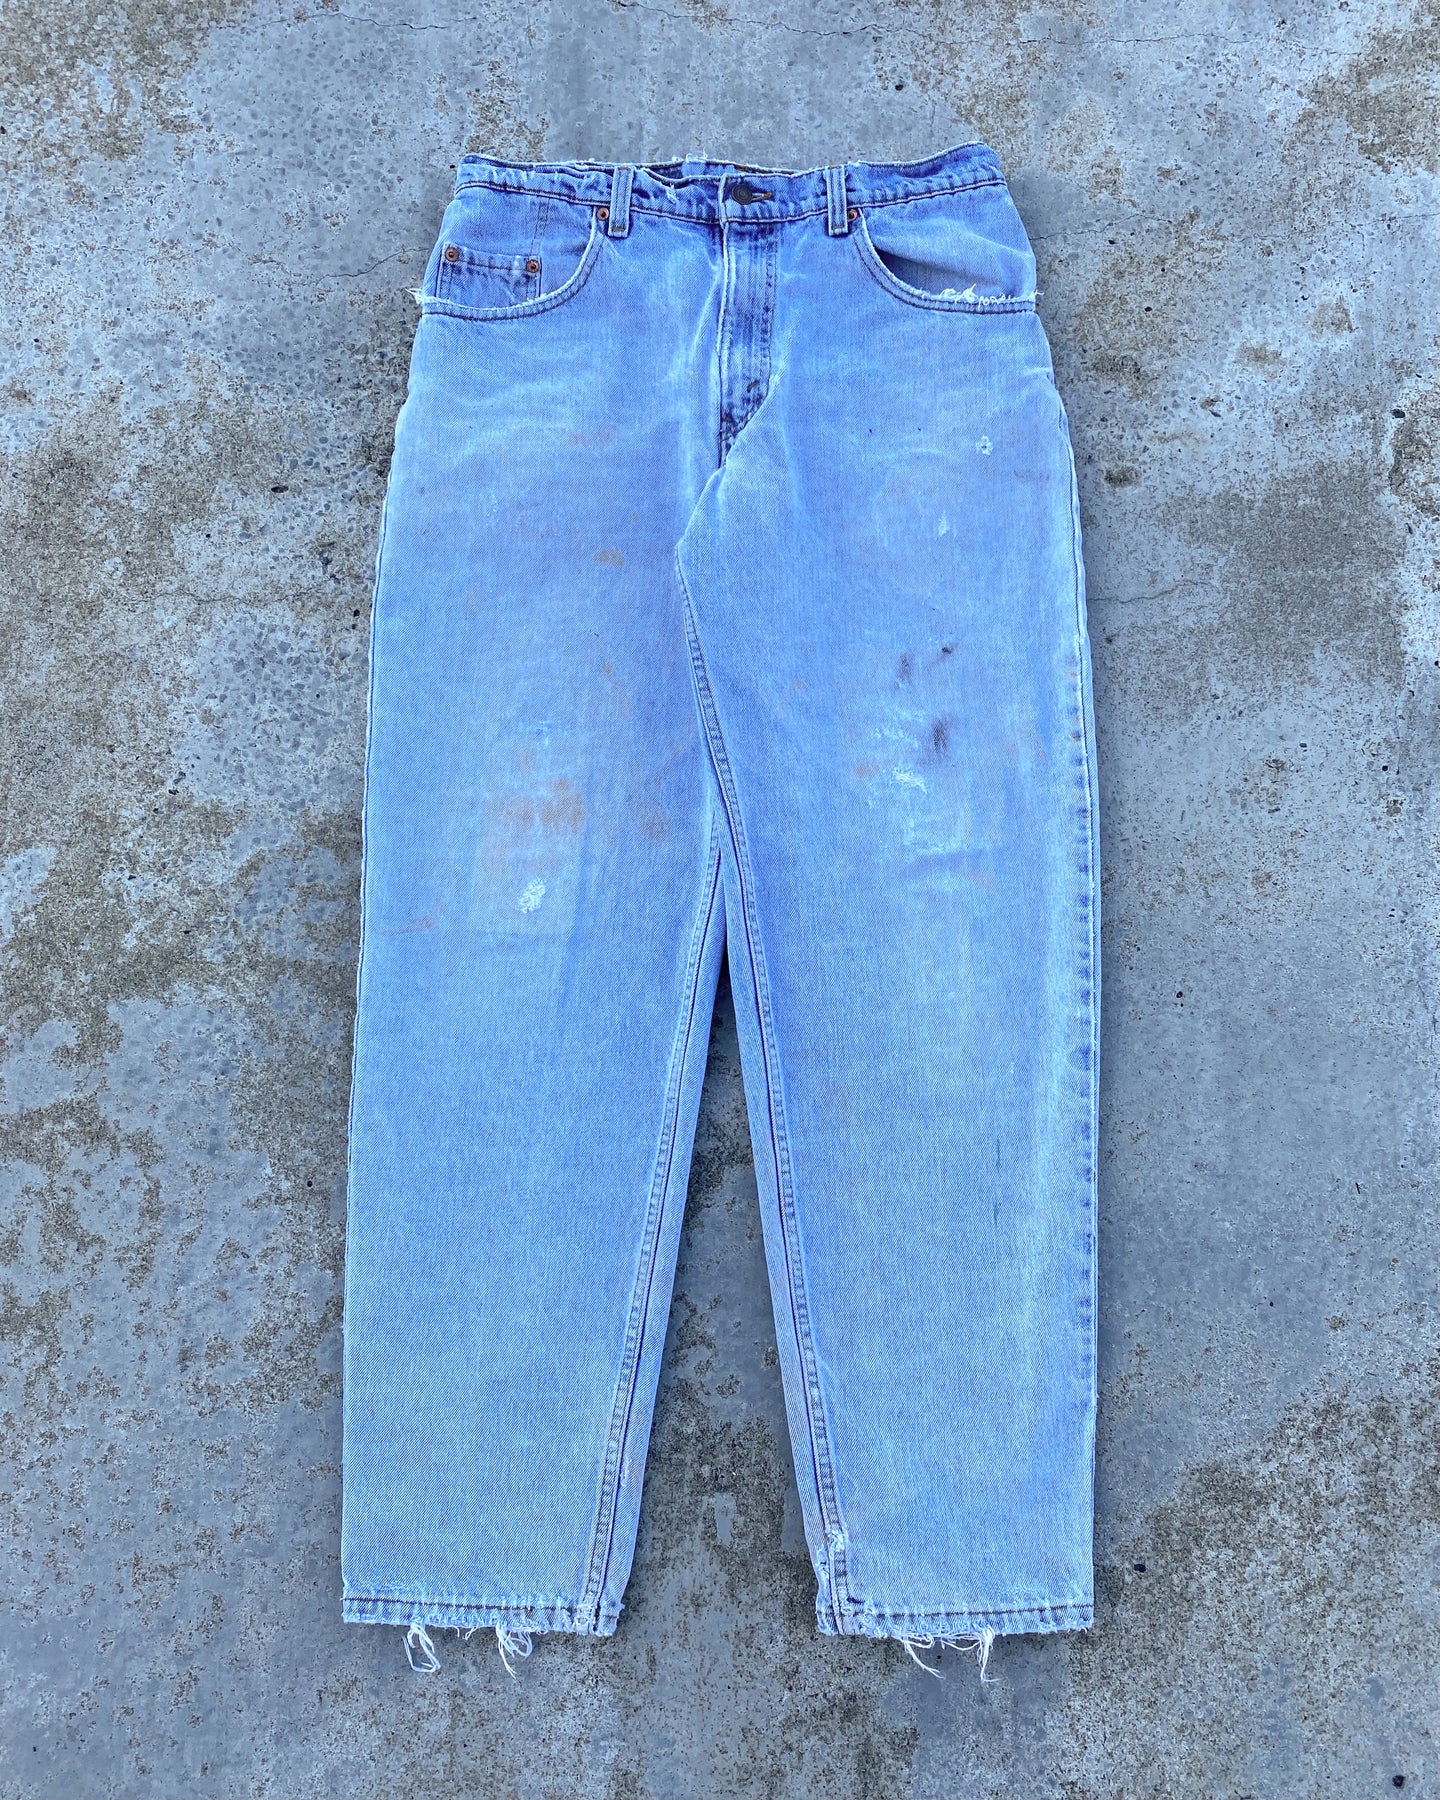 1990s Levi's 560 Distressed Light Wash Jeans - Size 32 x 31